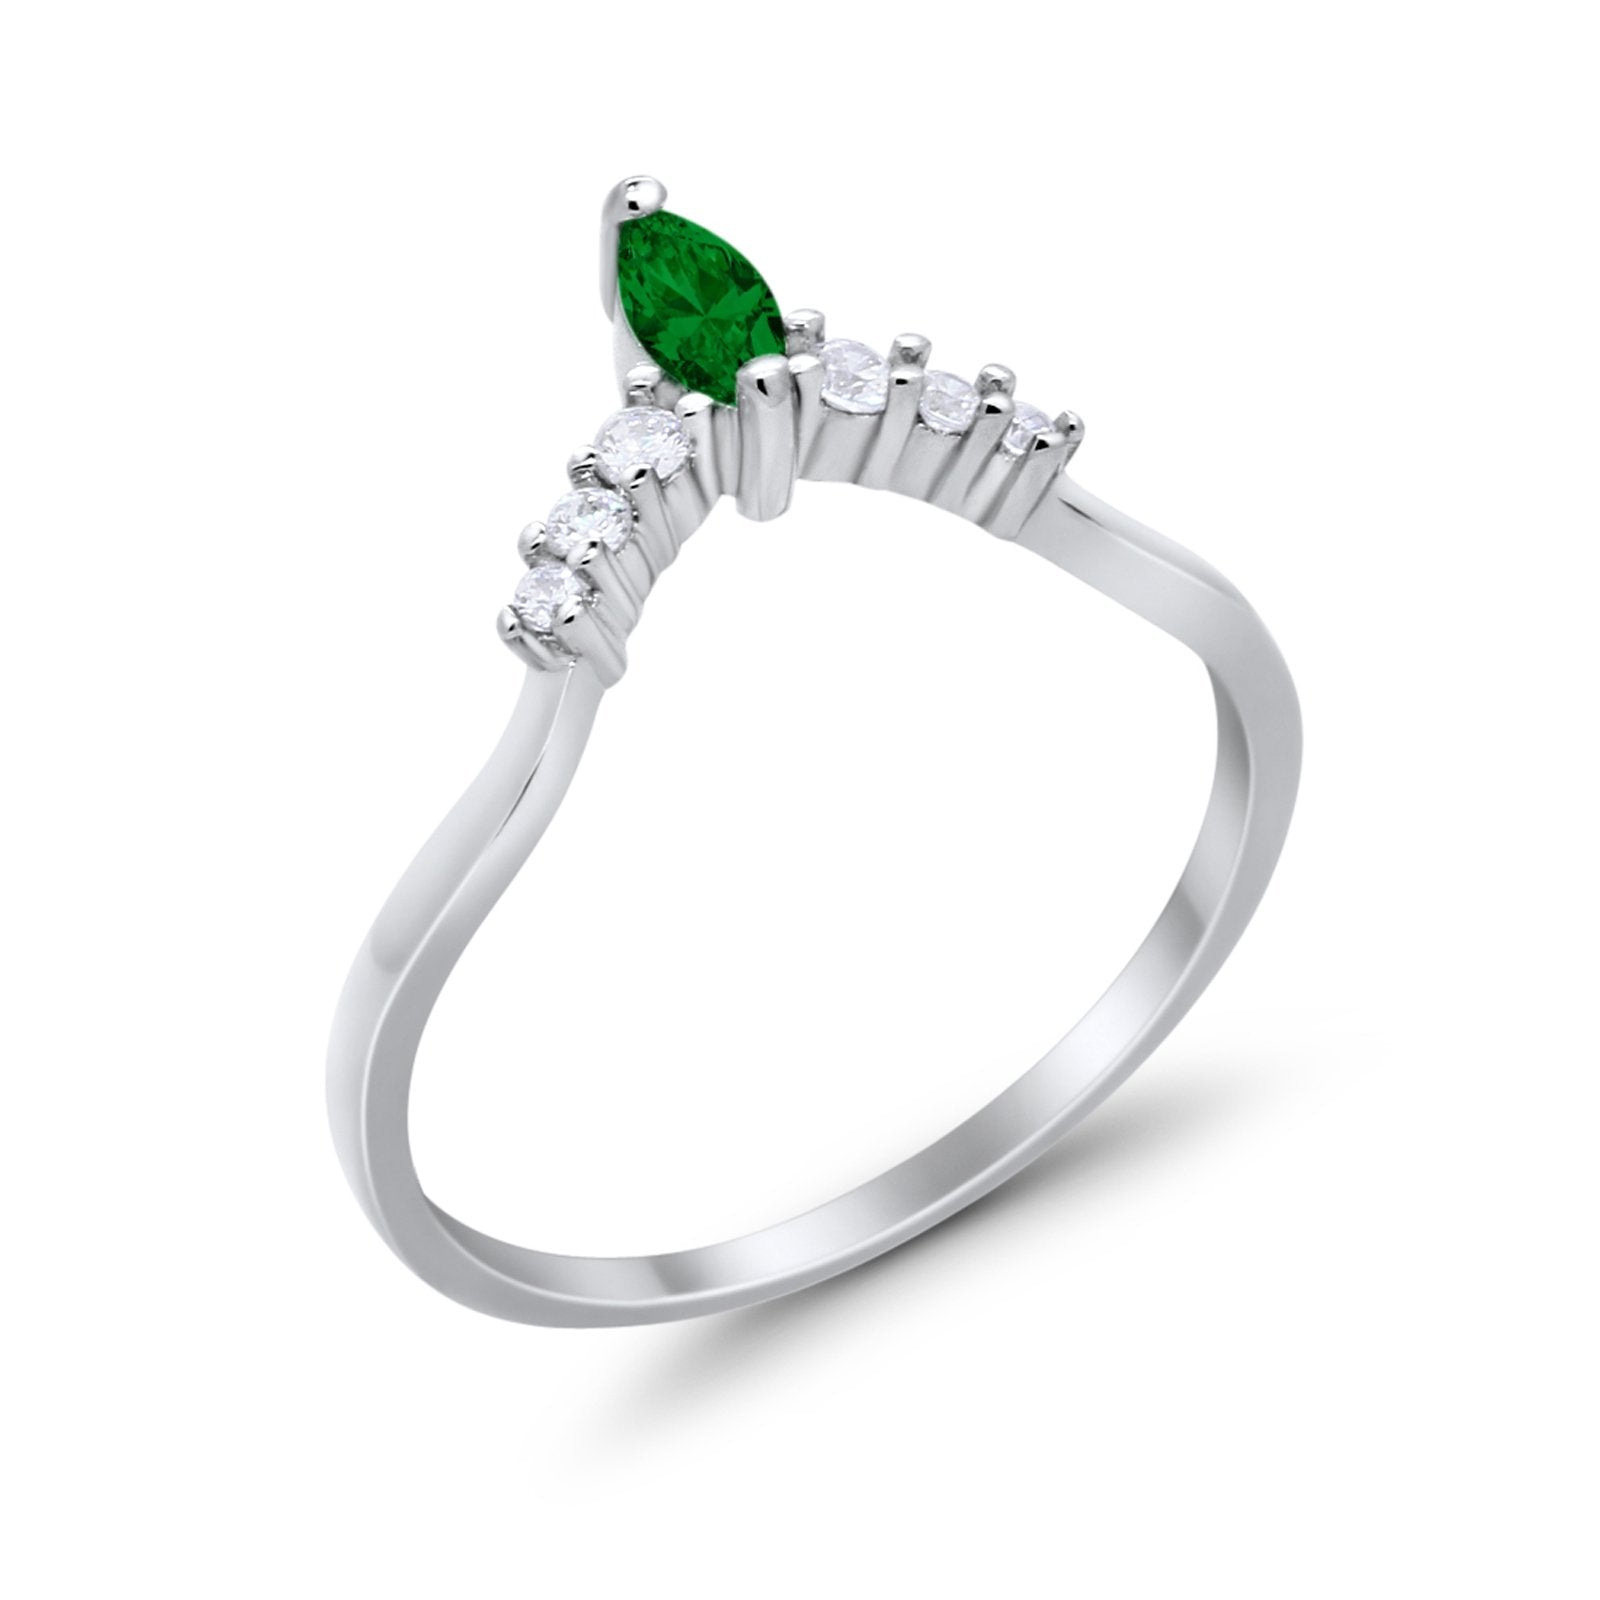 Art Deco Wedding Ring Chevron Midi Band Marquise Simulated Green Emerald CZ 925 Sterling Silver